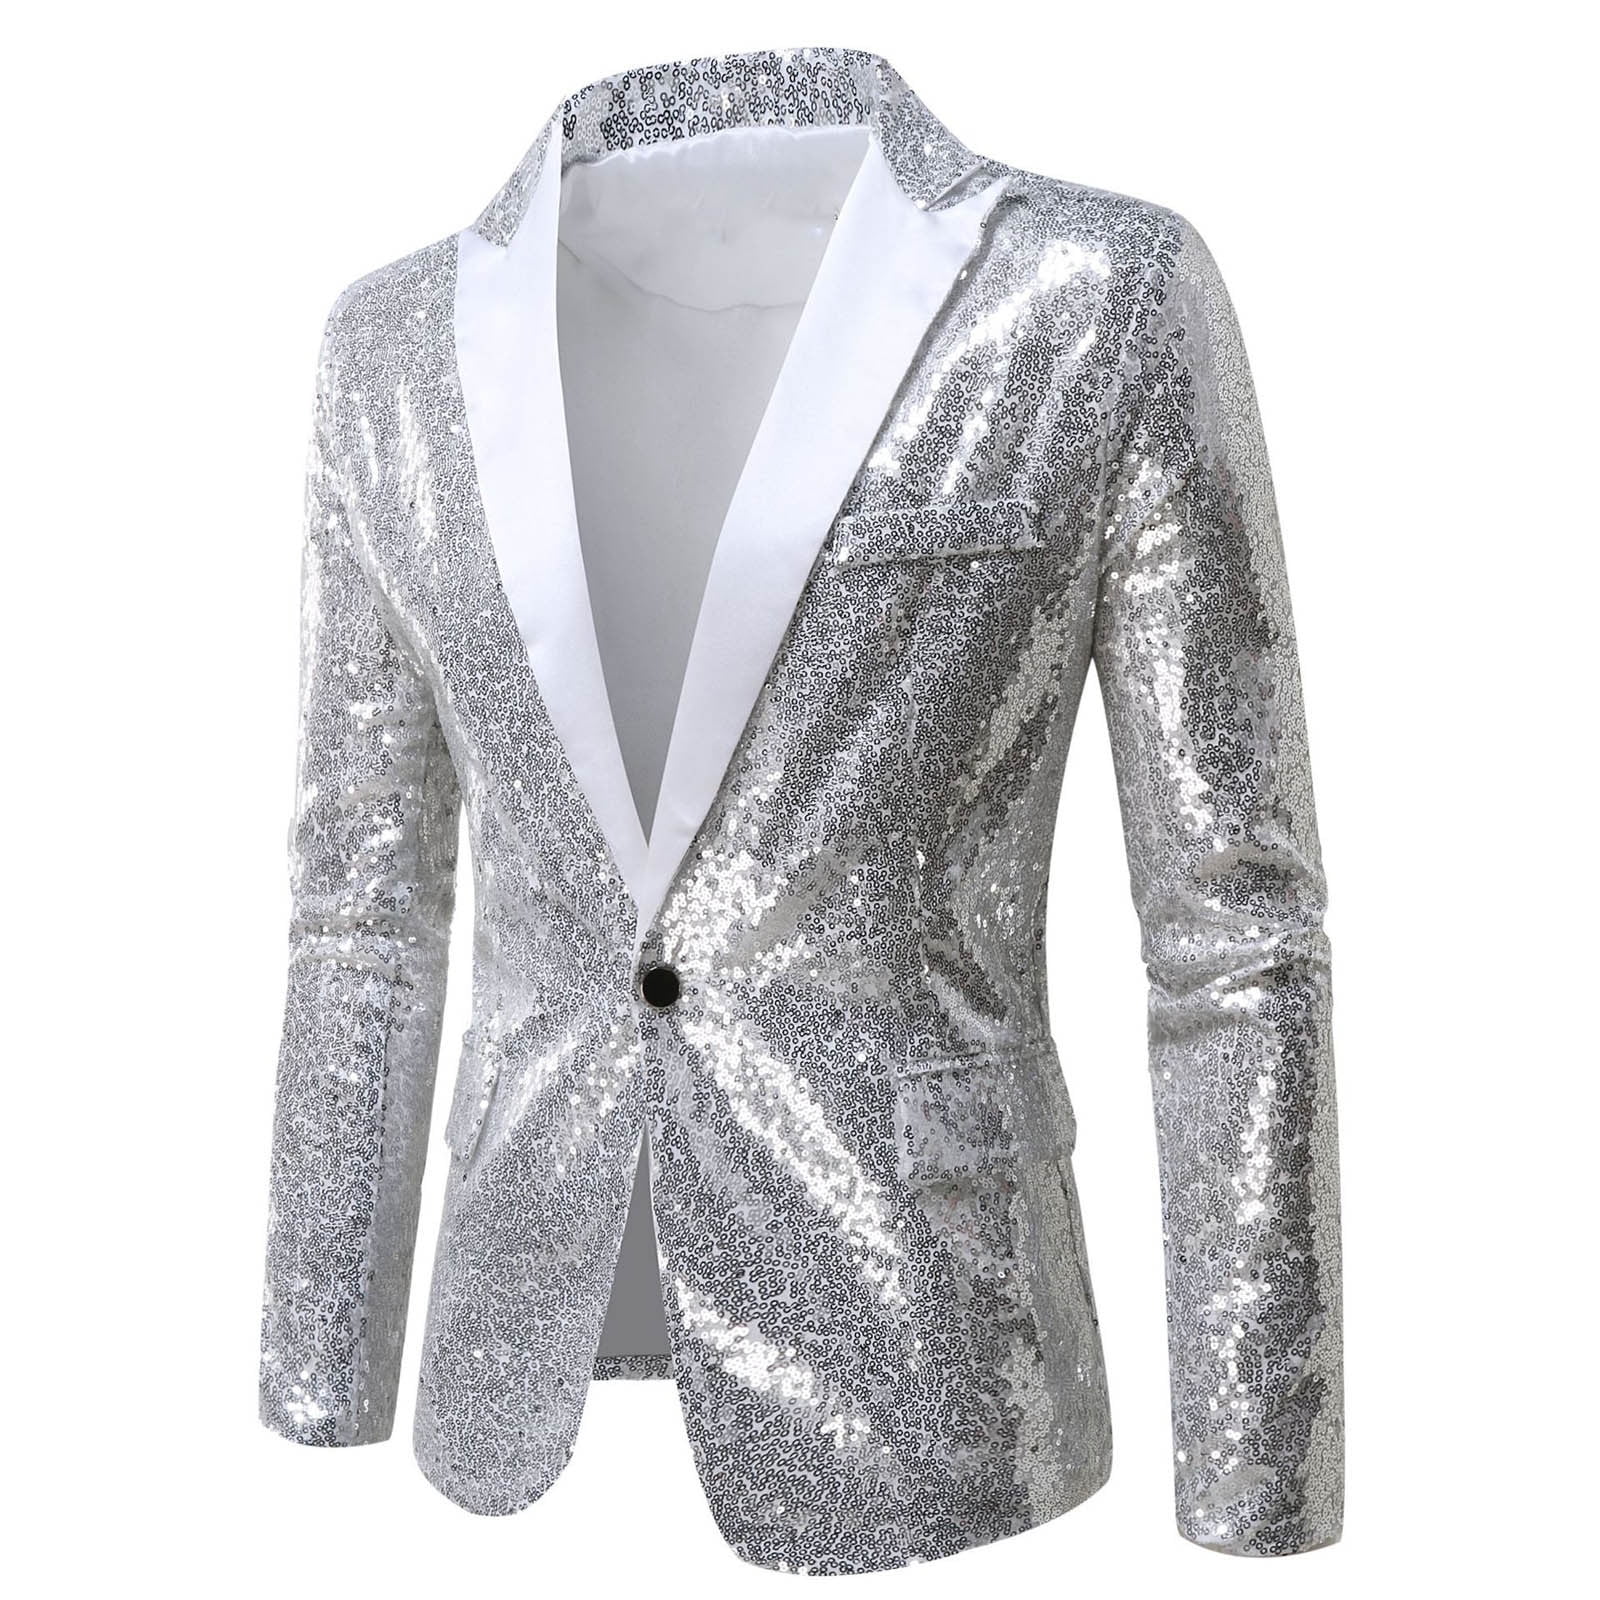 Men's Fashion Silver Grey Reflective Surface Wedding Tuxedo Suit | eBay